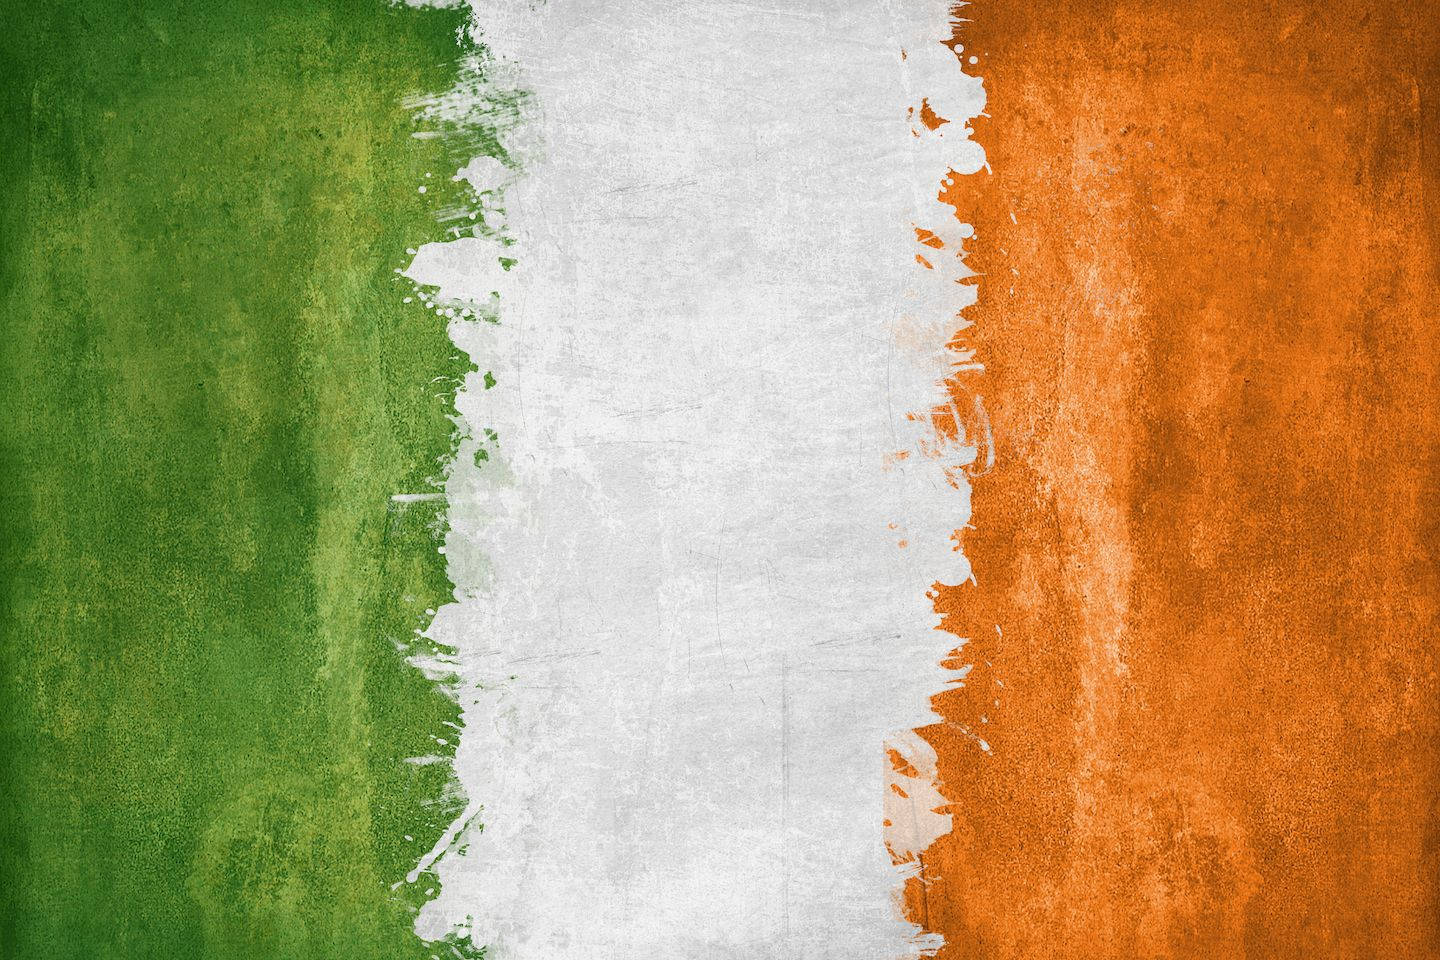 Irish Animated Flag